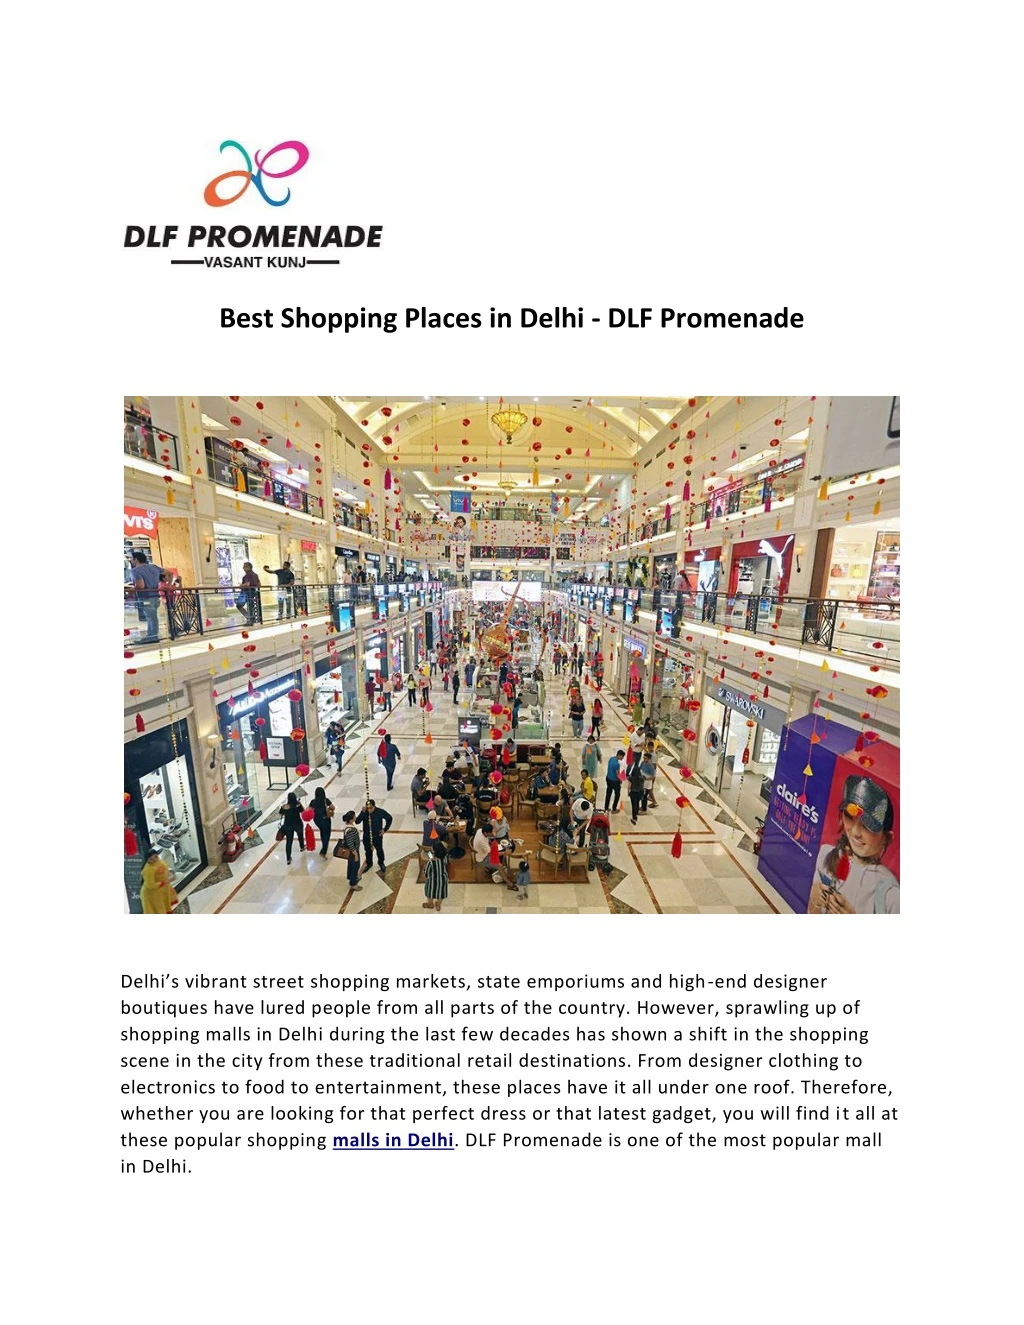 best shopping places in delhi dlf promenade